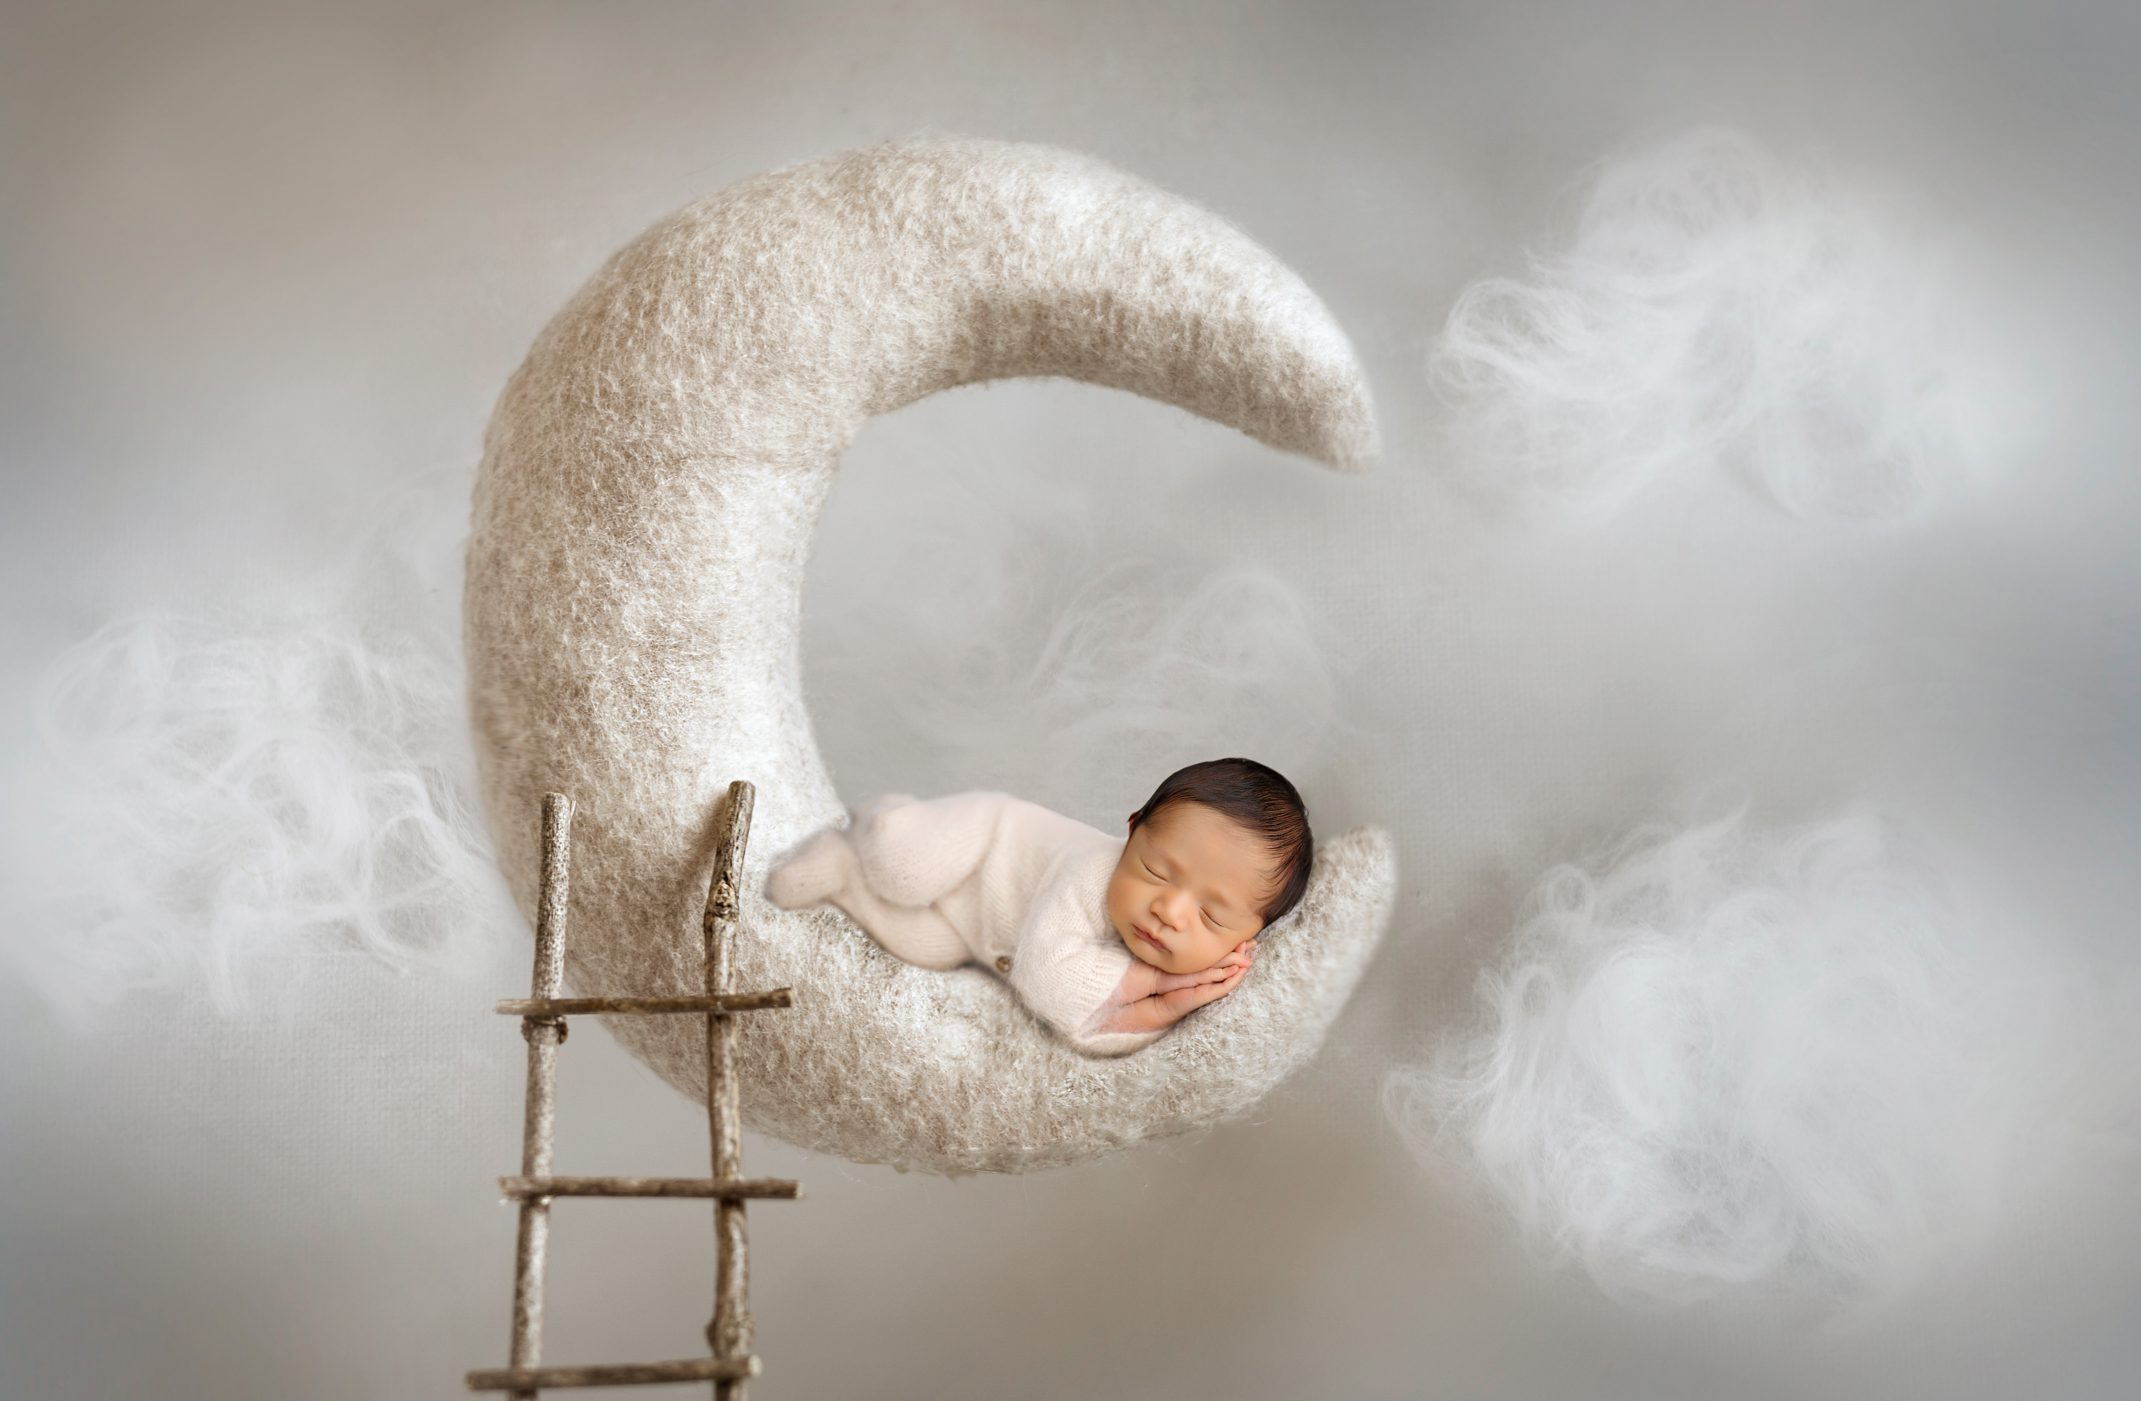 Newborn photoshoot in san antonio Texas. Baby is sleeping and posed on a moon. Photoshoot done by San Antonio photographer, Krystal Garcia Photography